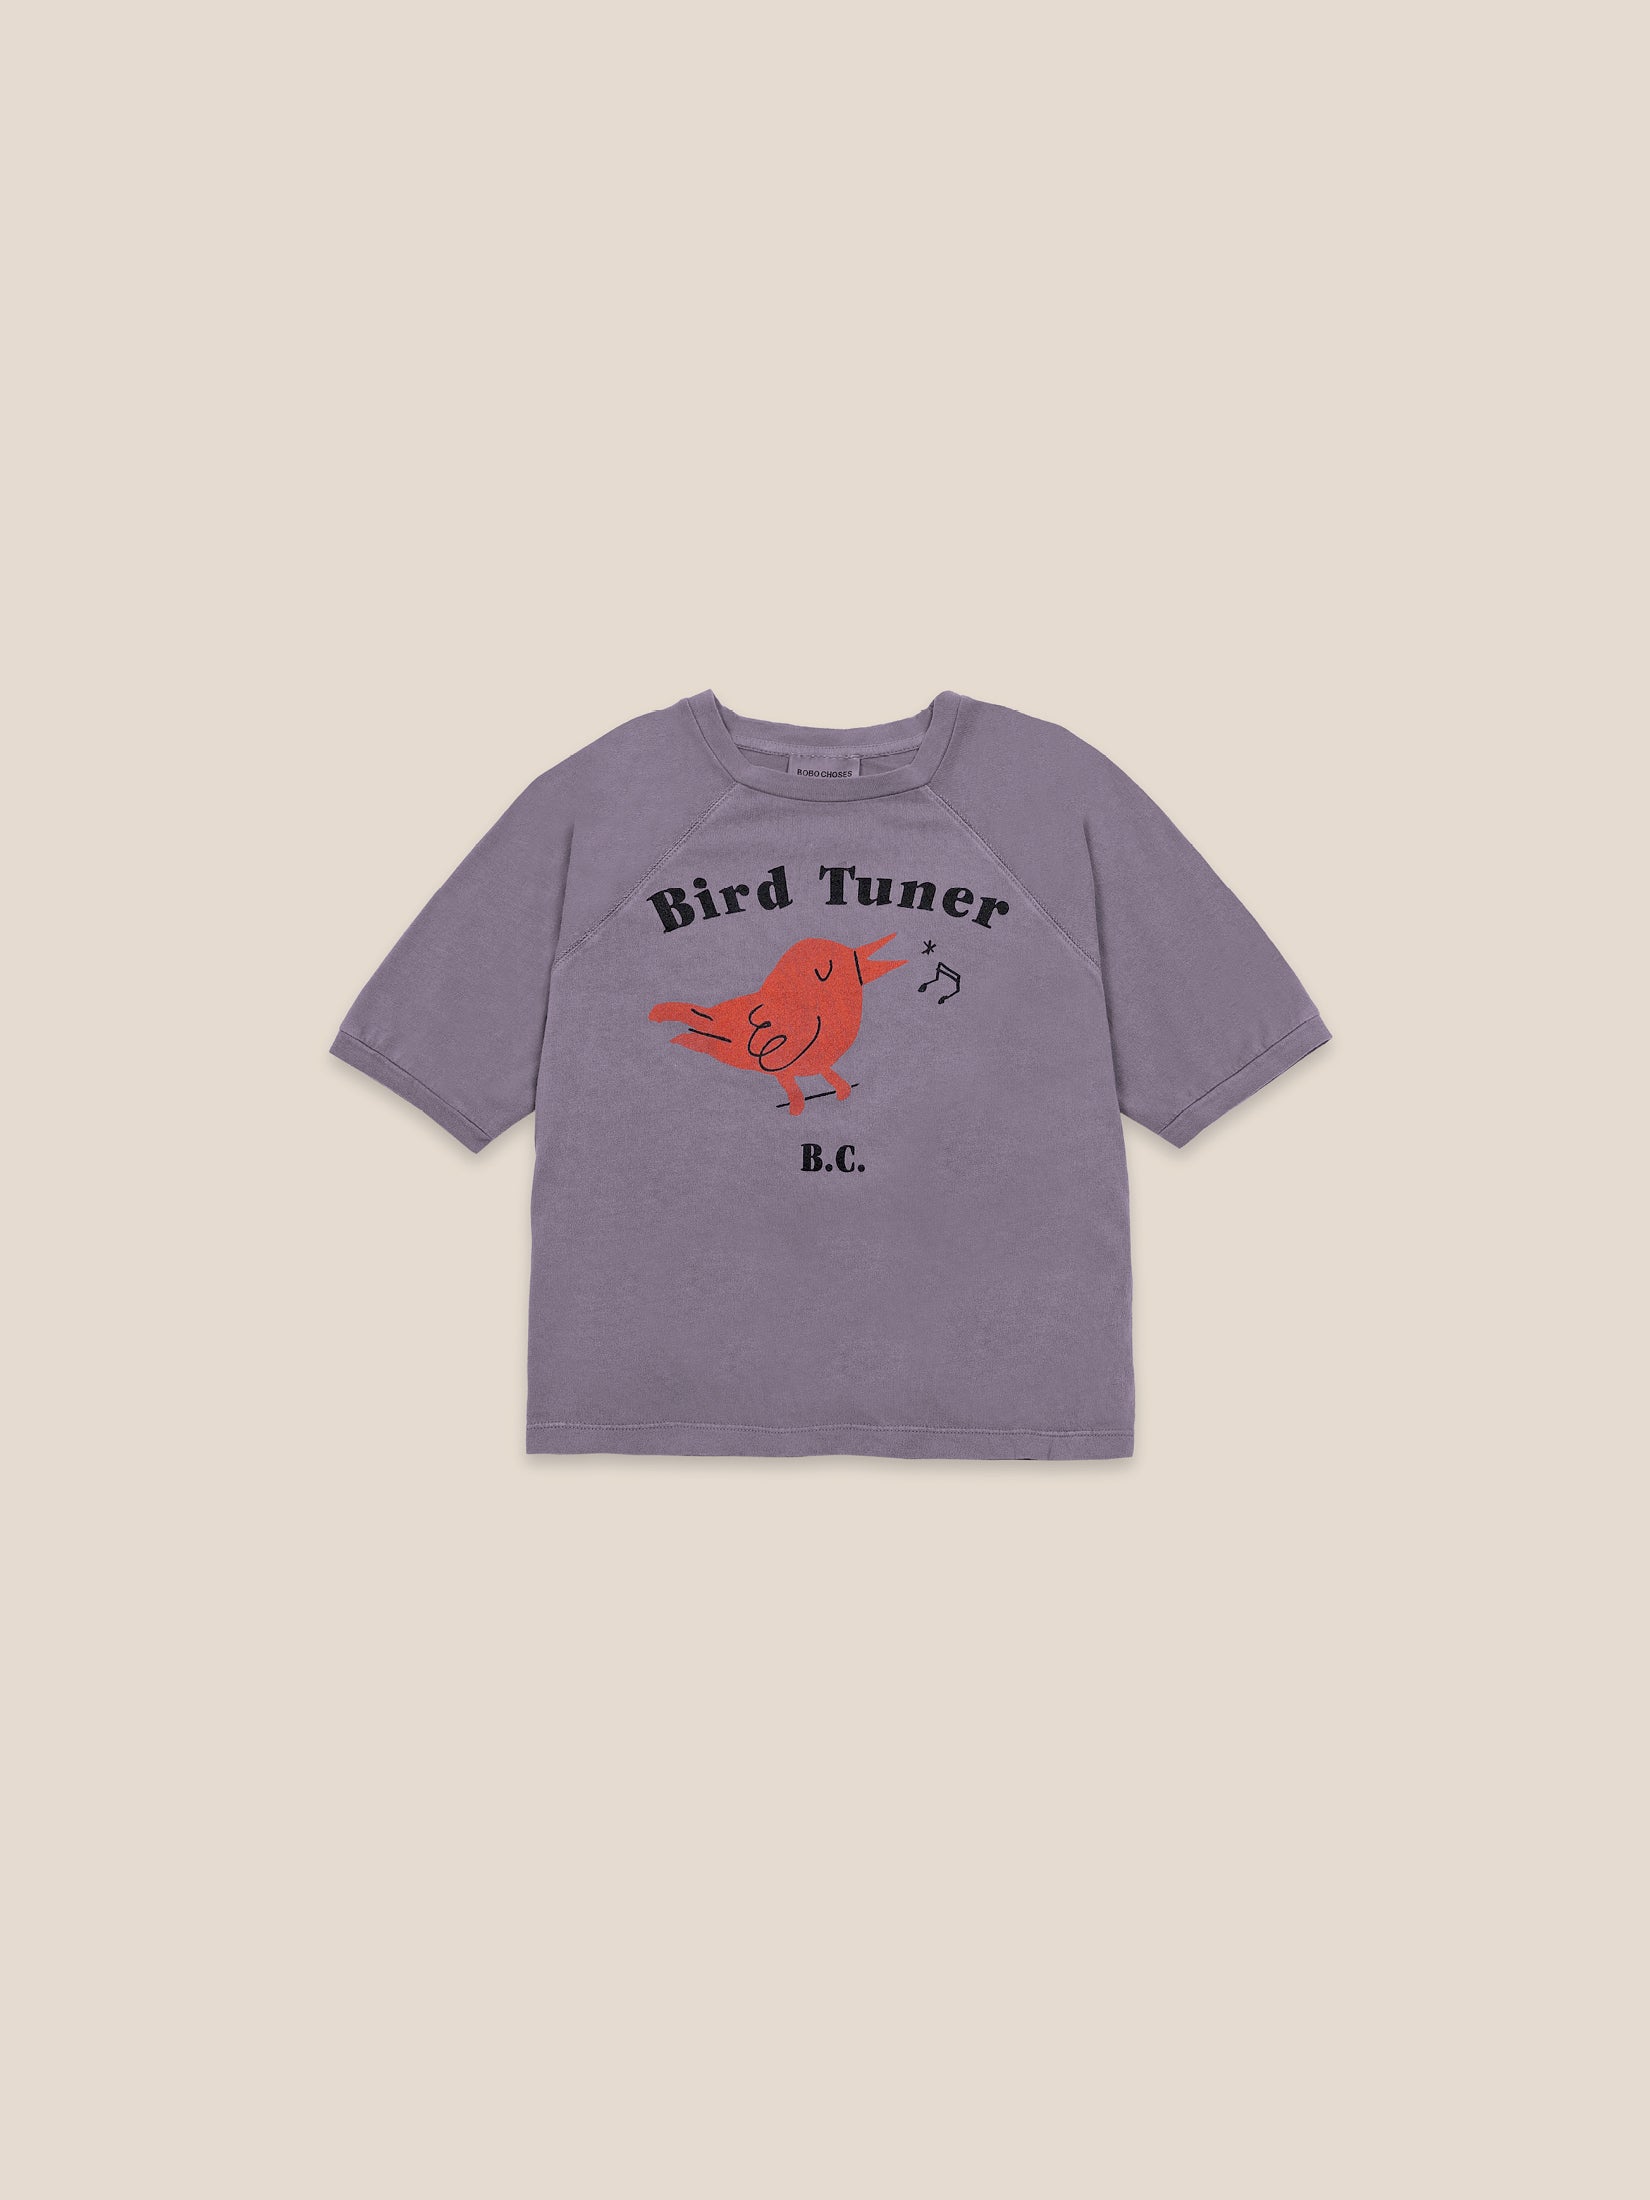 Boys Crape Compote Bird Tuner Organic Cotton T-Shirt